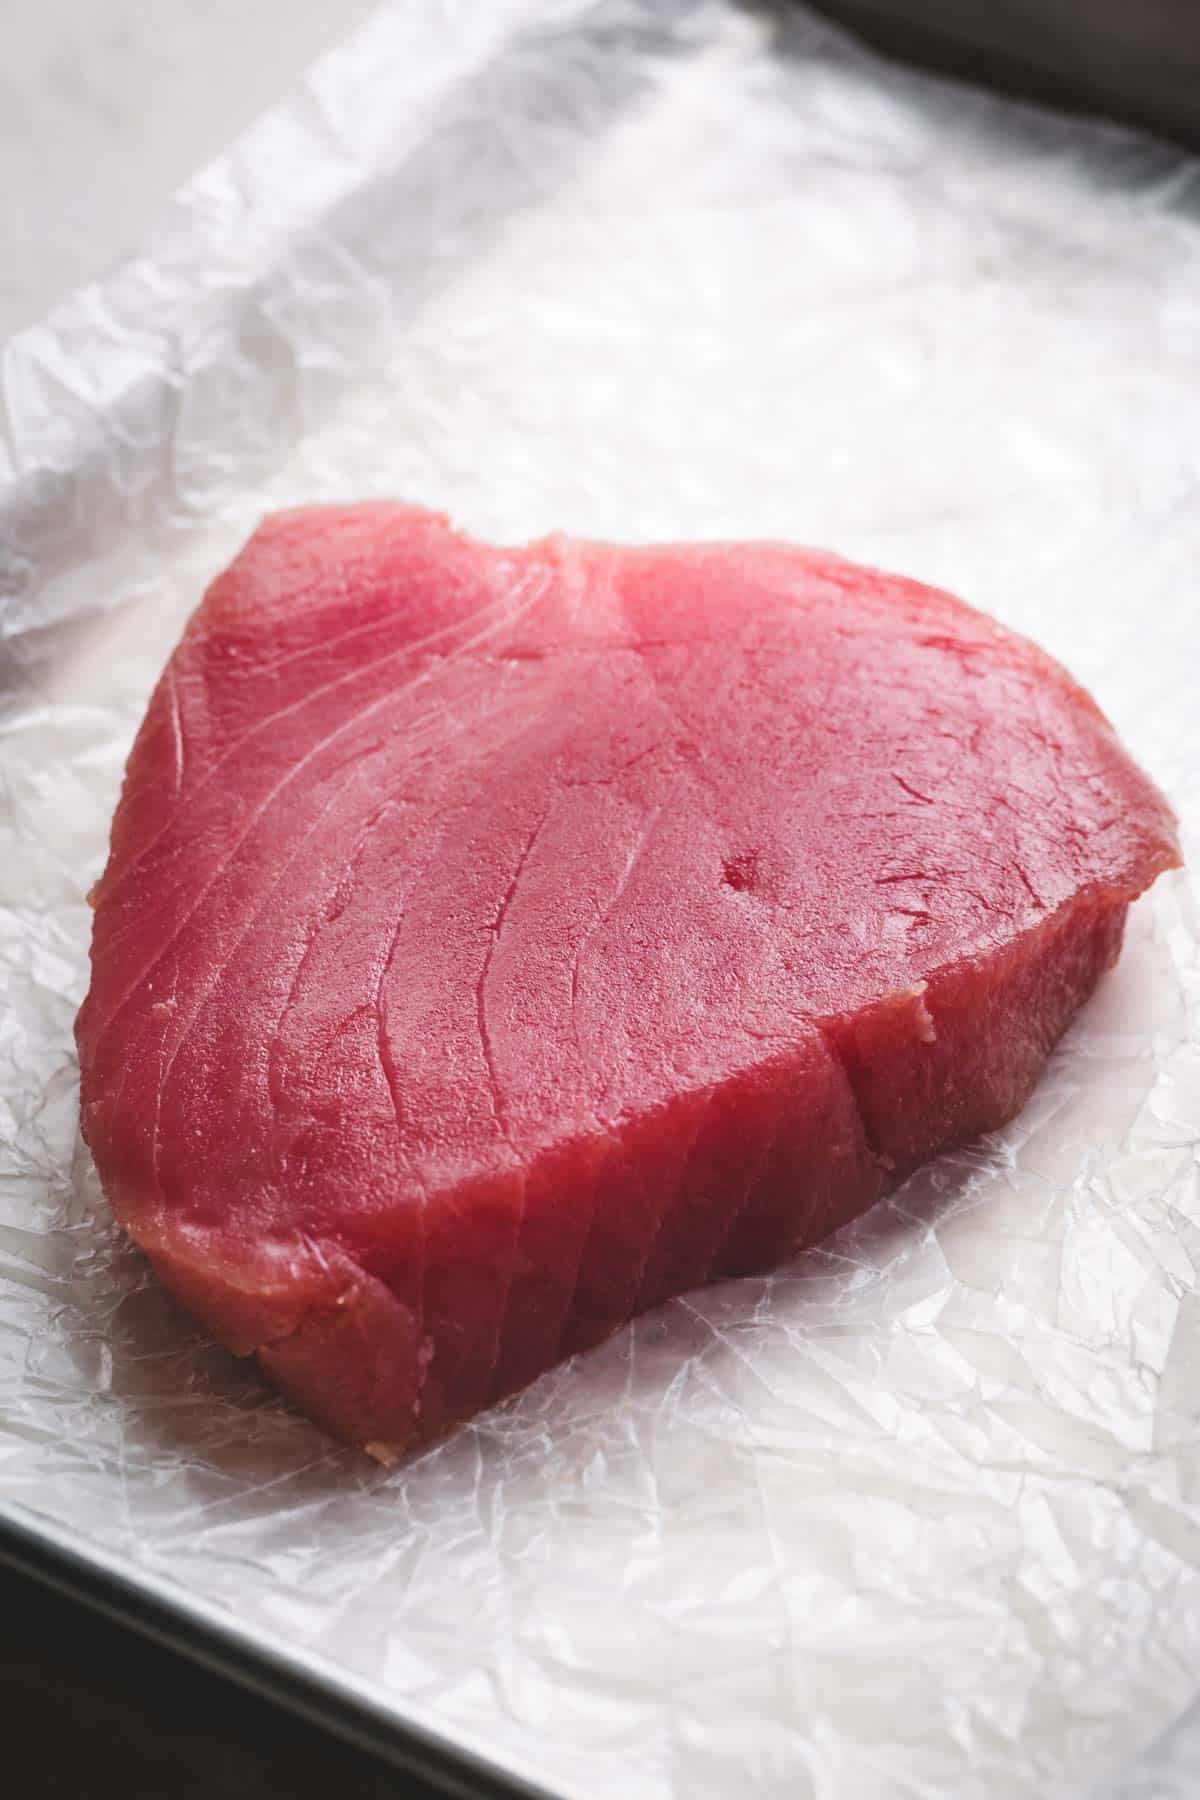 Raw ahi tuna steak on a white parchment paper.